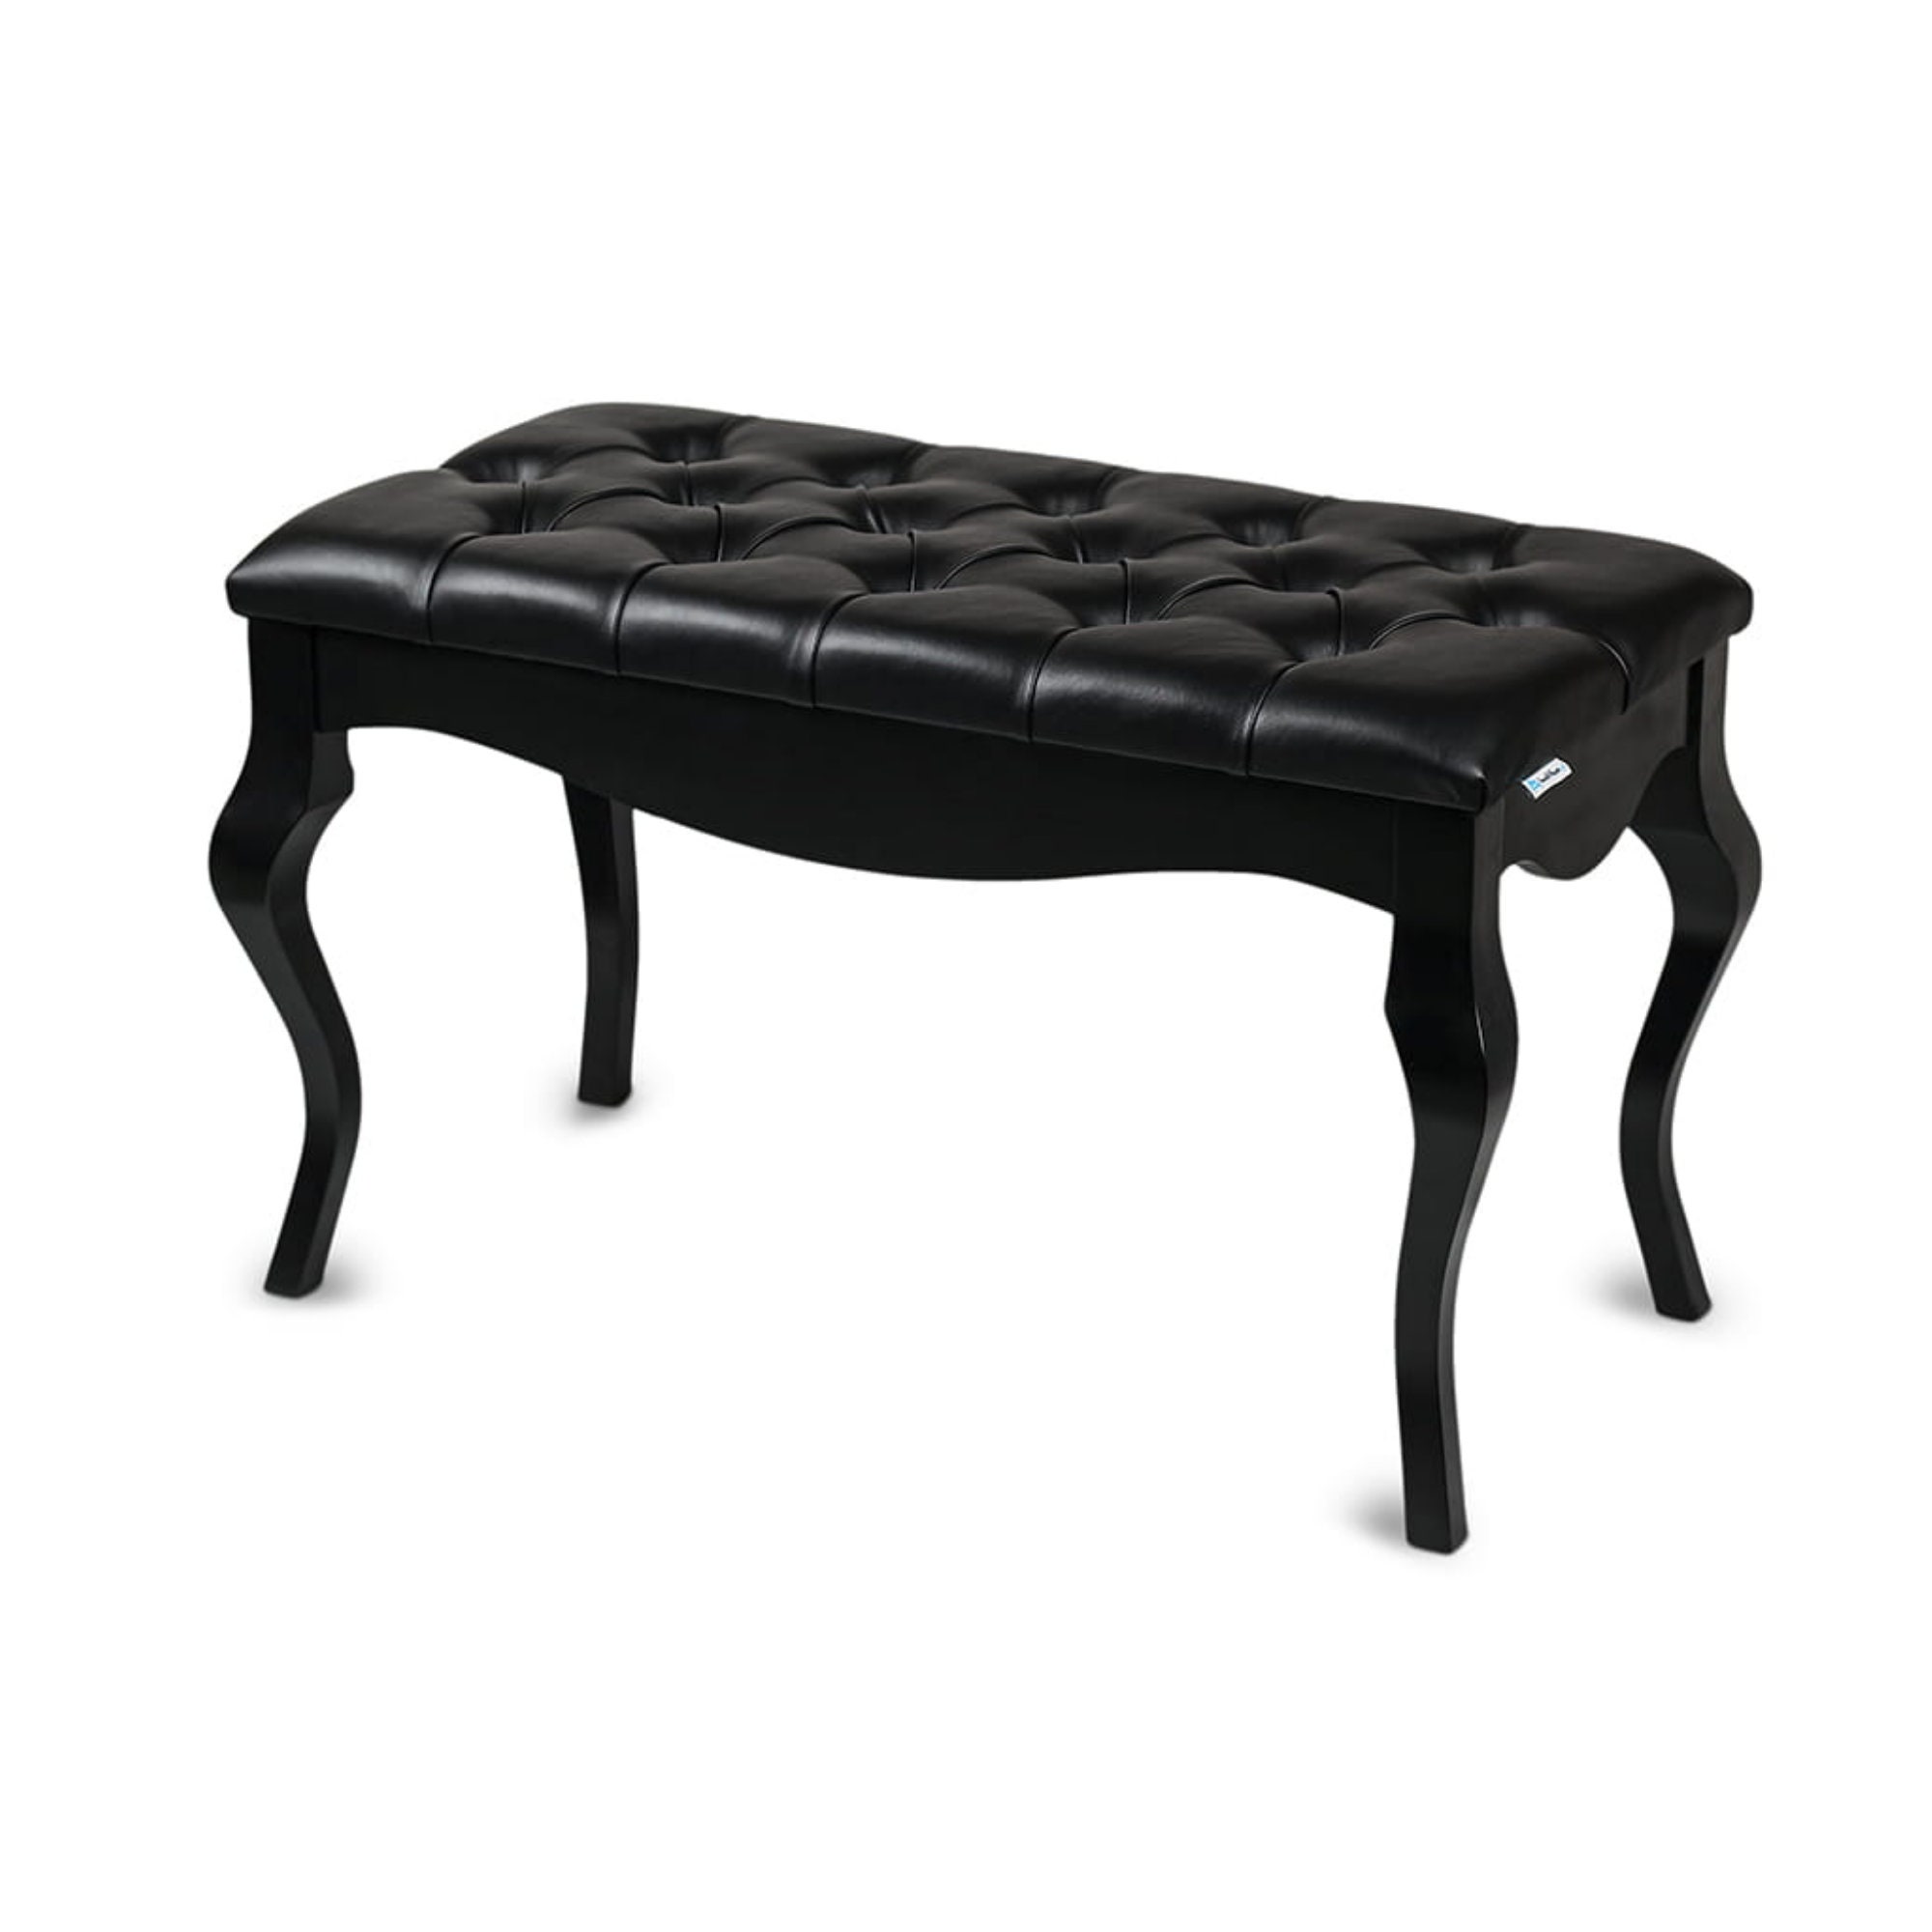 FBBSZSD Muebles tapizado de madera maciza otomana puf silla banco  reposapiés redondo práctico reposapiés sala de estar, sofá, vestidor,  taburete de